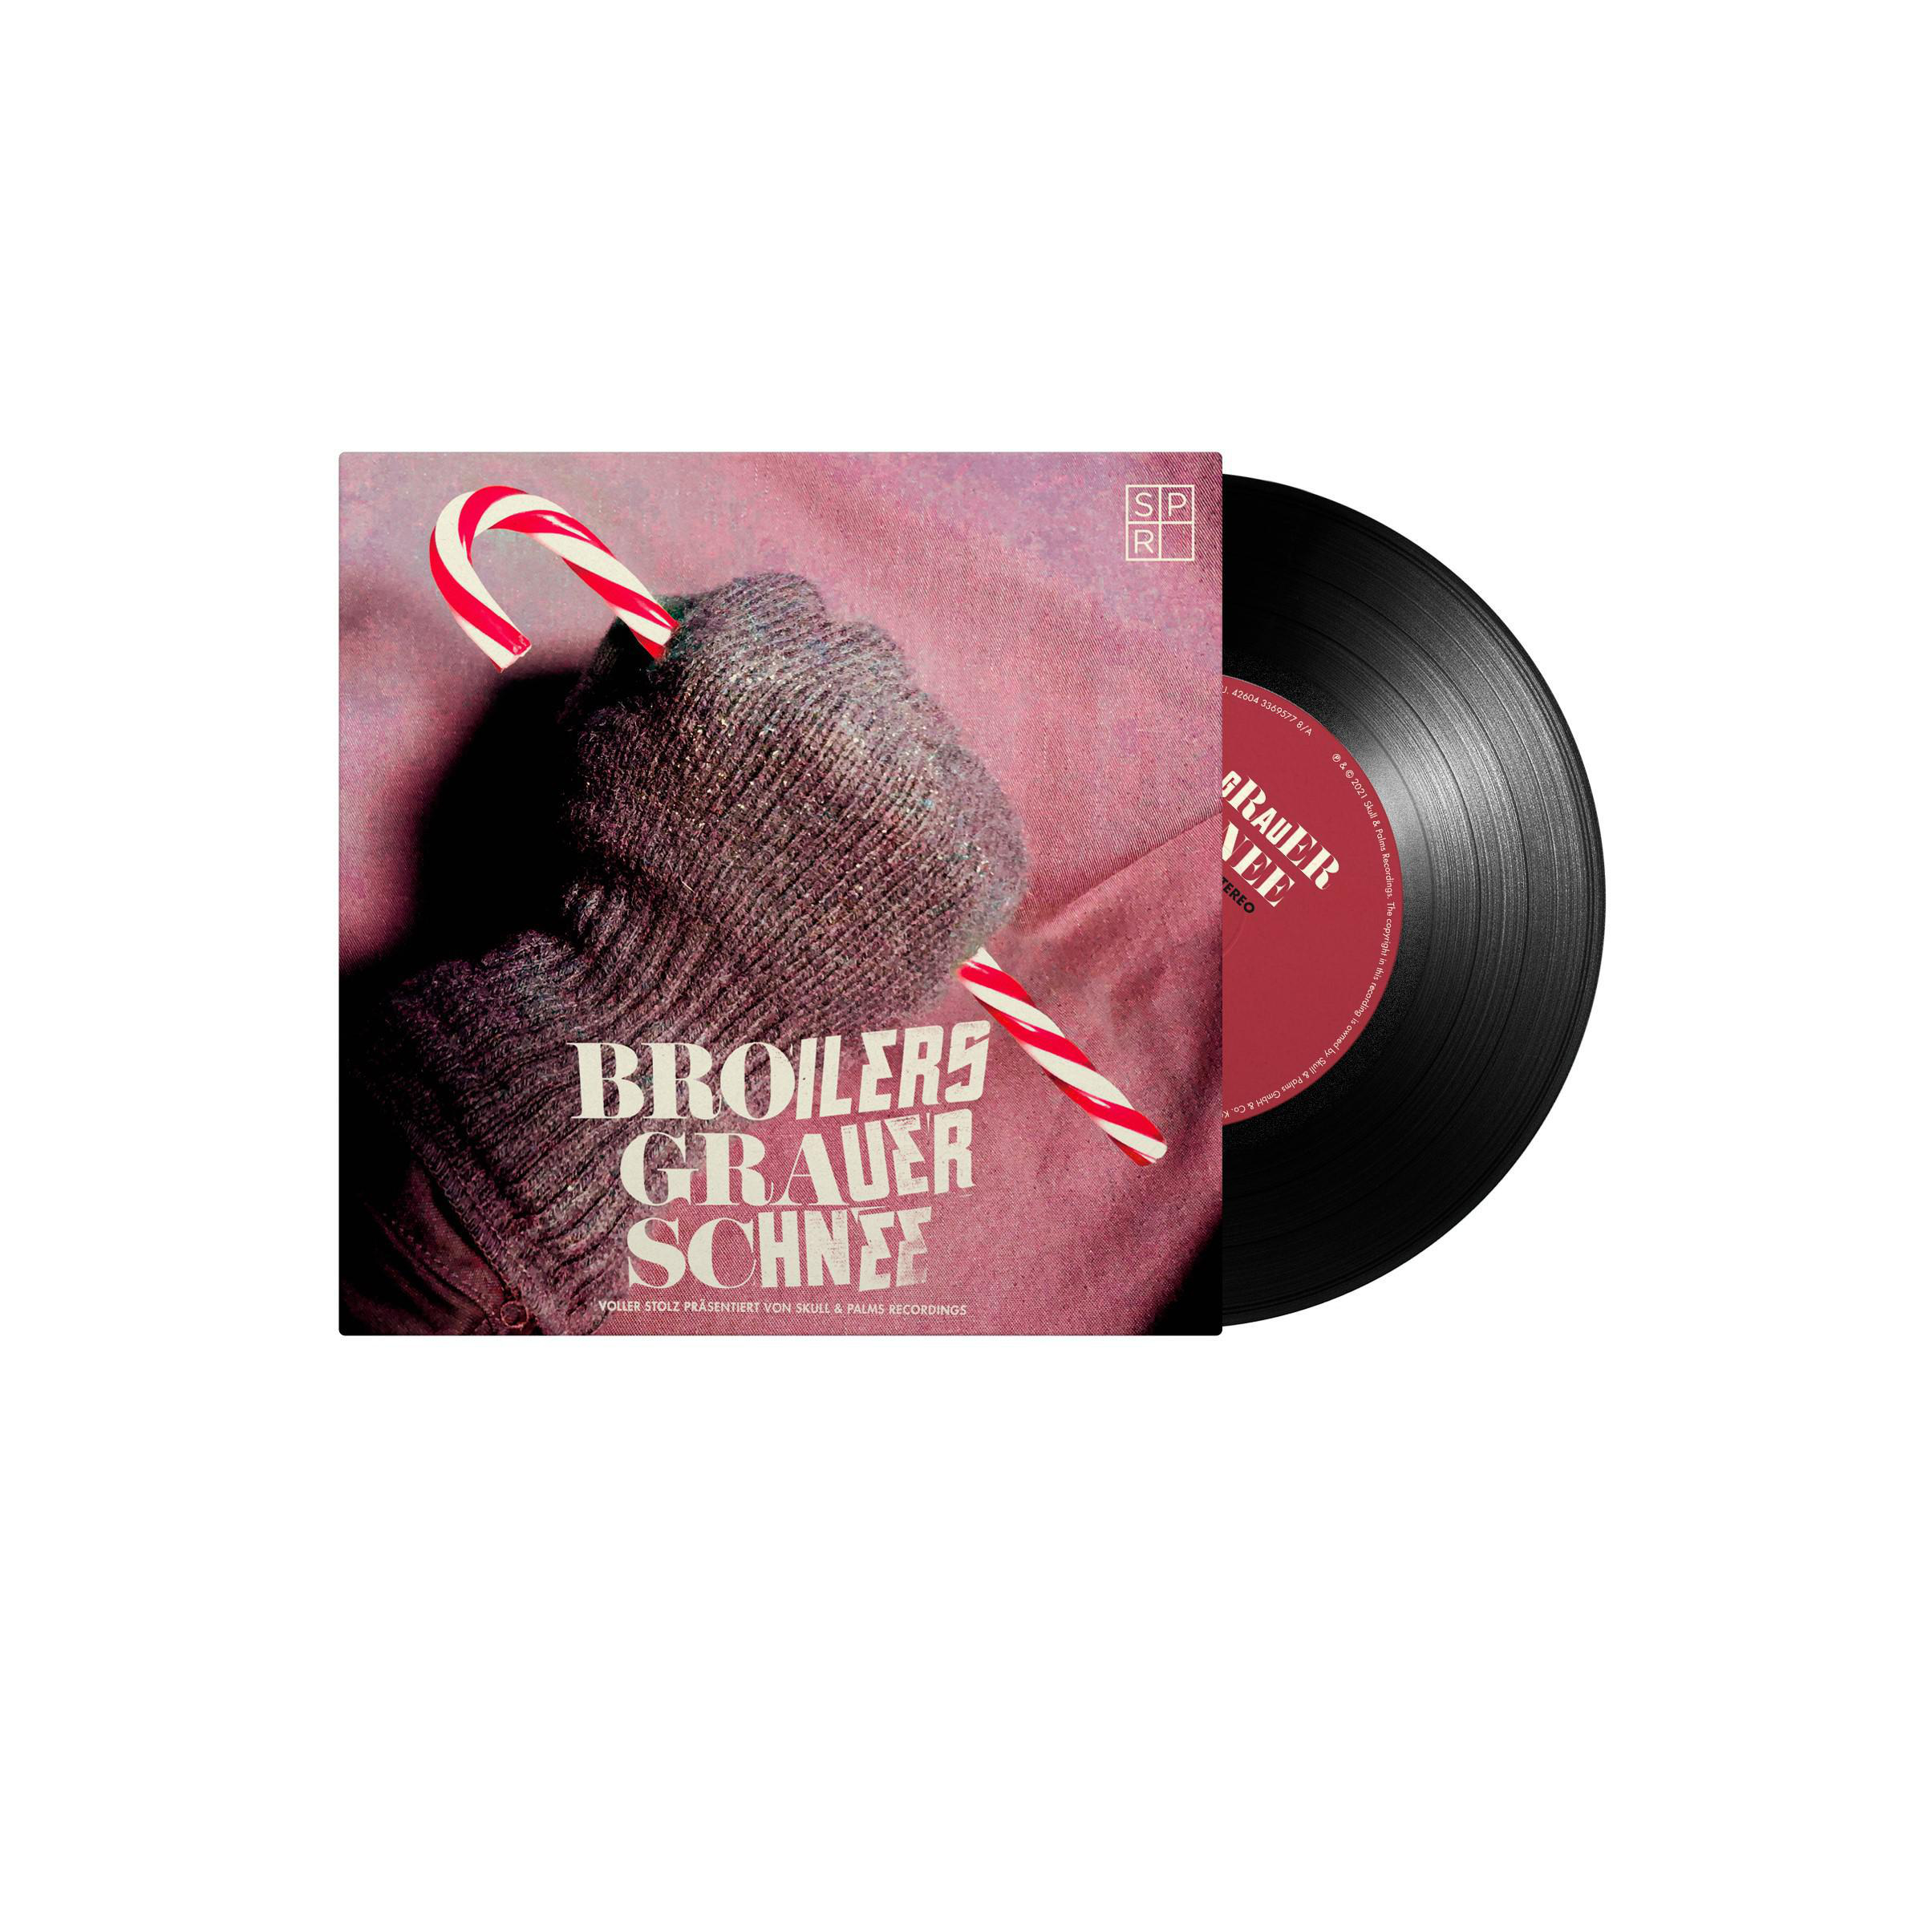 Grauer And nummeriert) (Vinyl) Schnee - - Broilers (limitiert